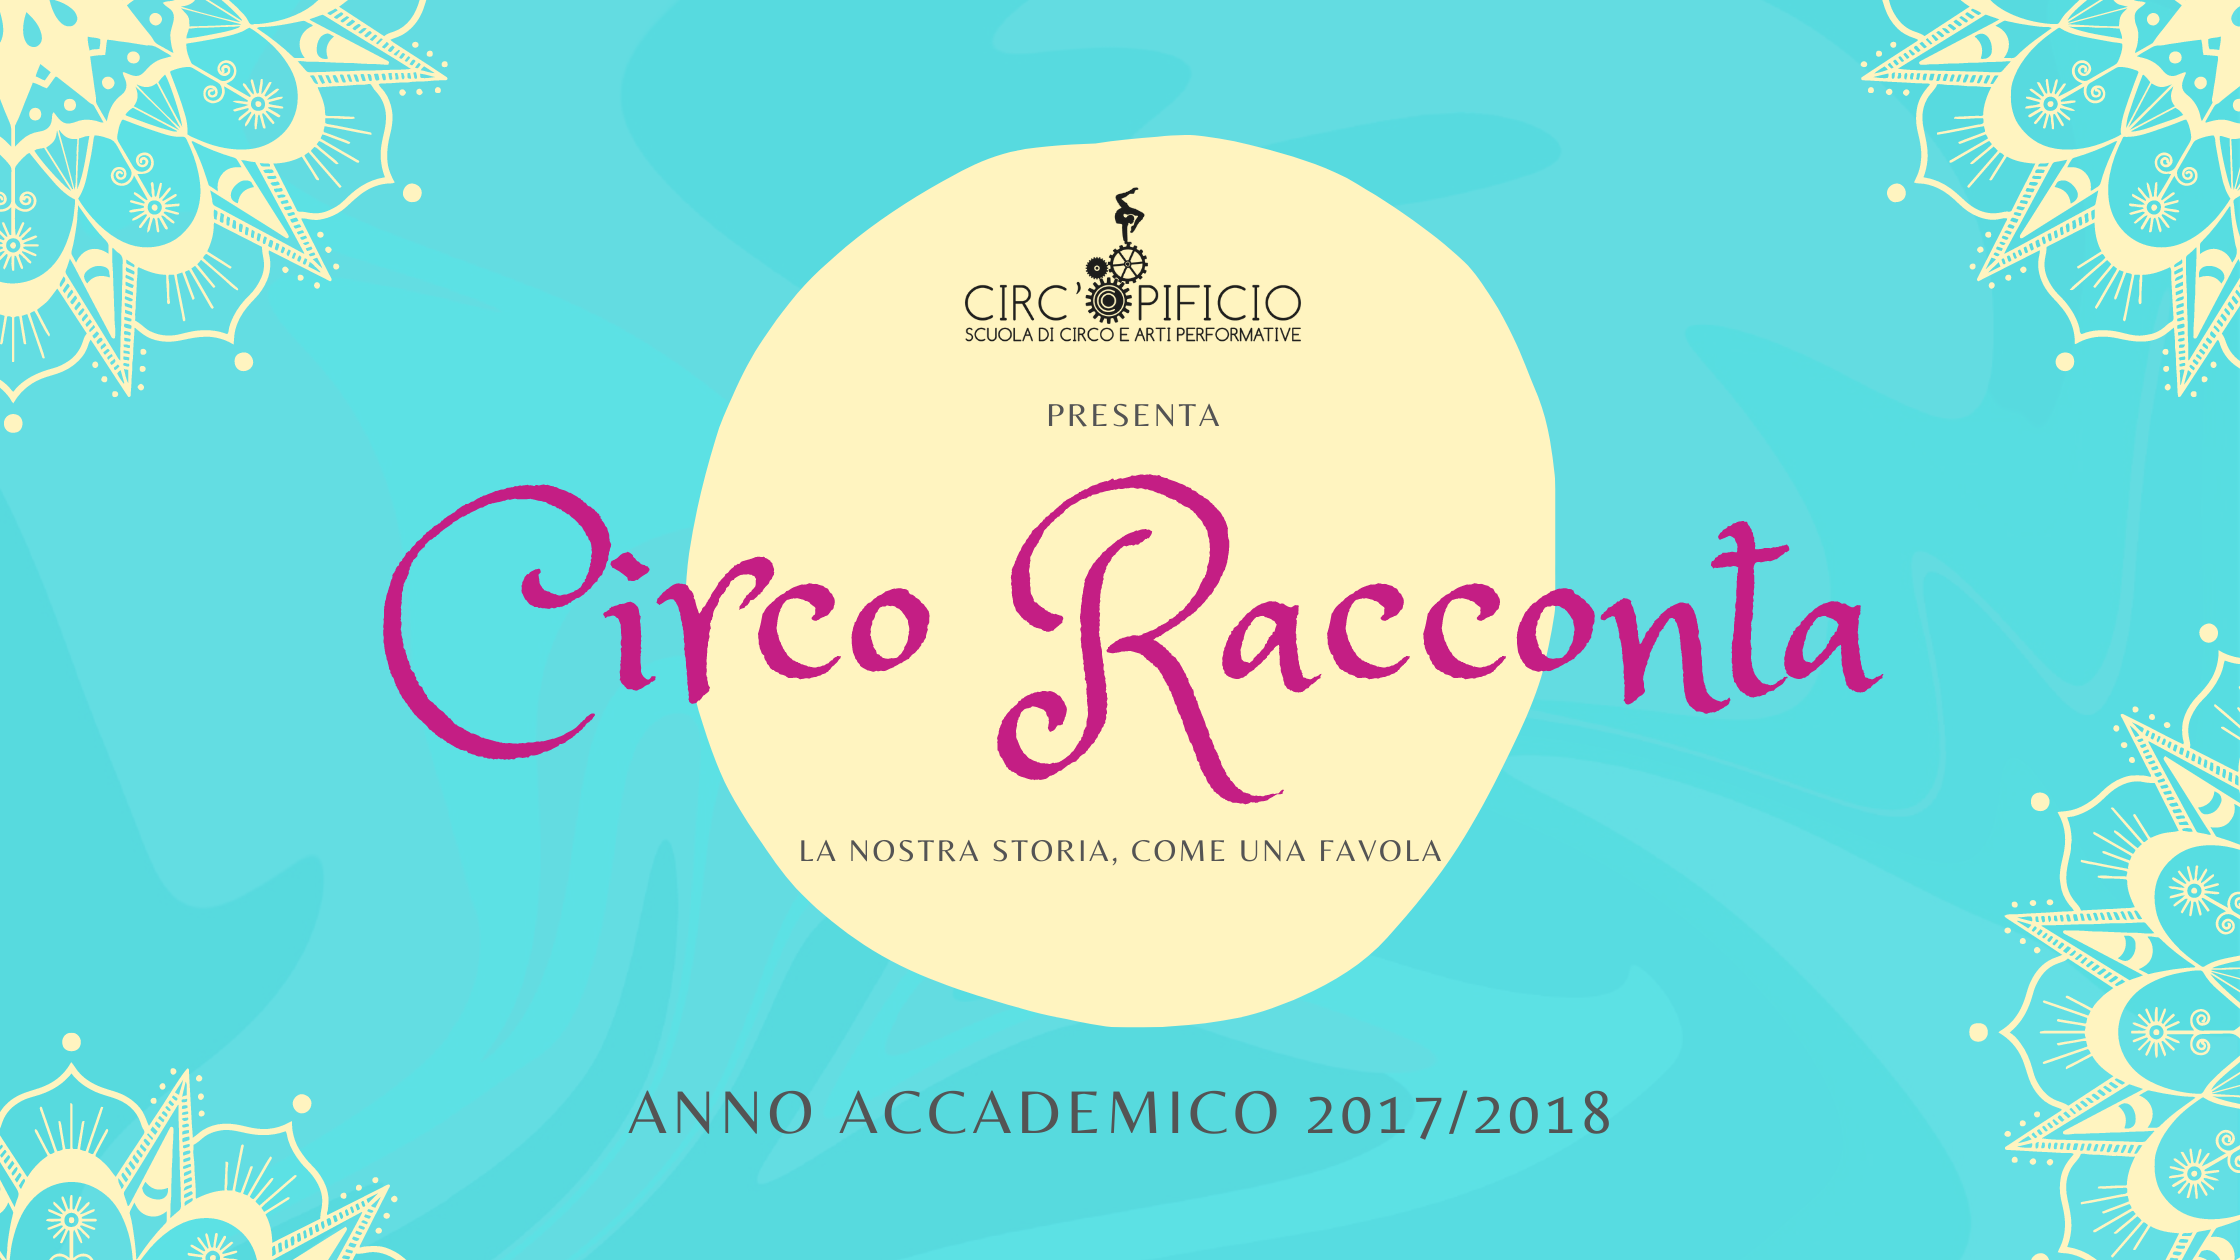 http://www.circopificio.it/wp-content/uploads/2020/12/Circo-Racconta.png